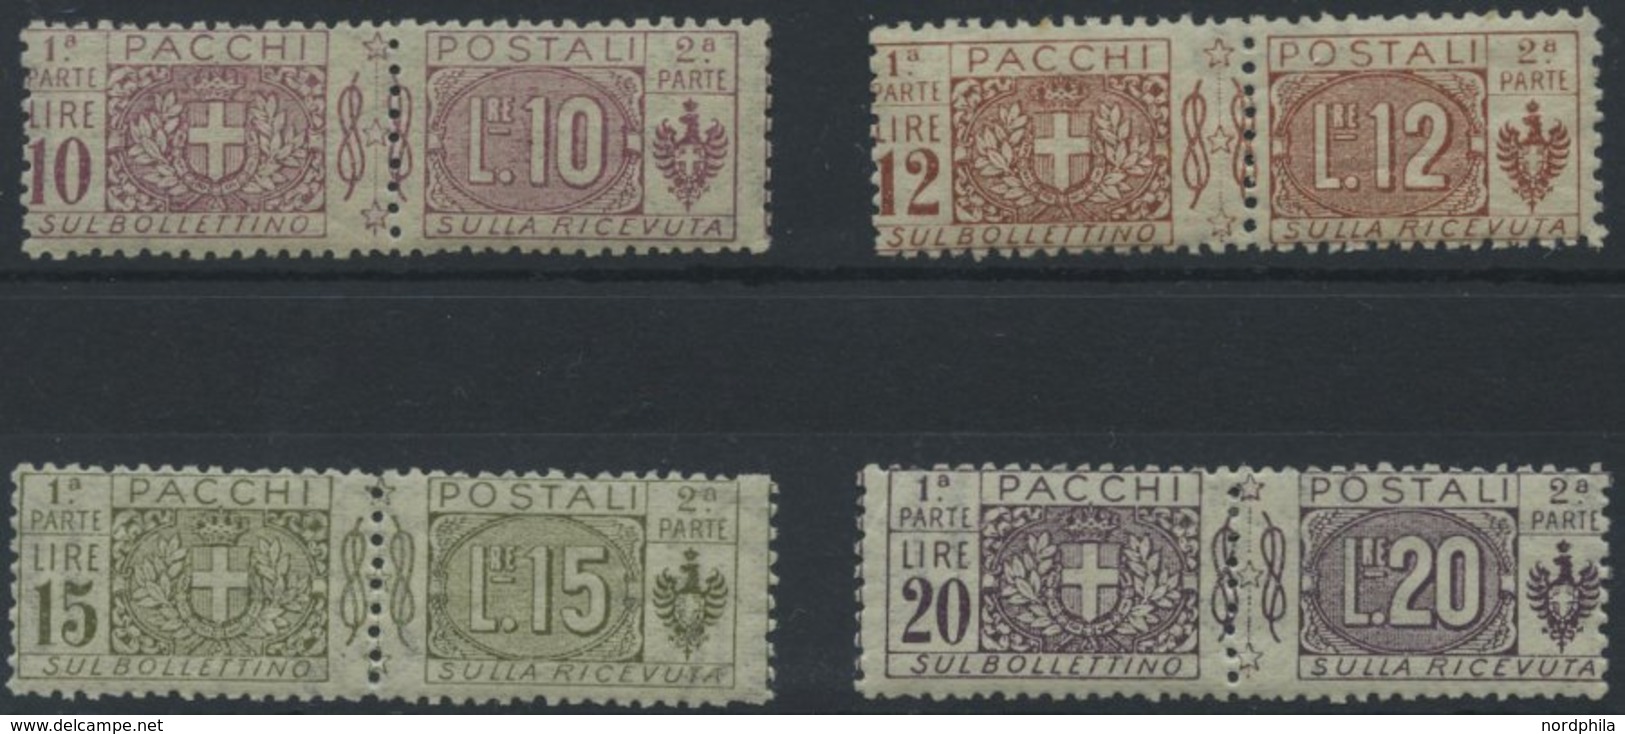 PAKETMARKEN Pa 16-19 *, 1921/22, Wappen Und Wertziffer, Falzrest, Prachtsatz - Postal Parcels